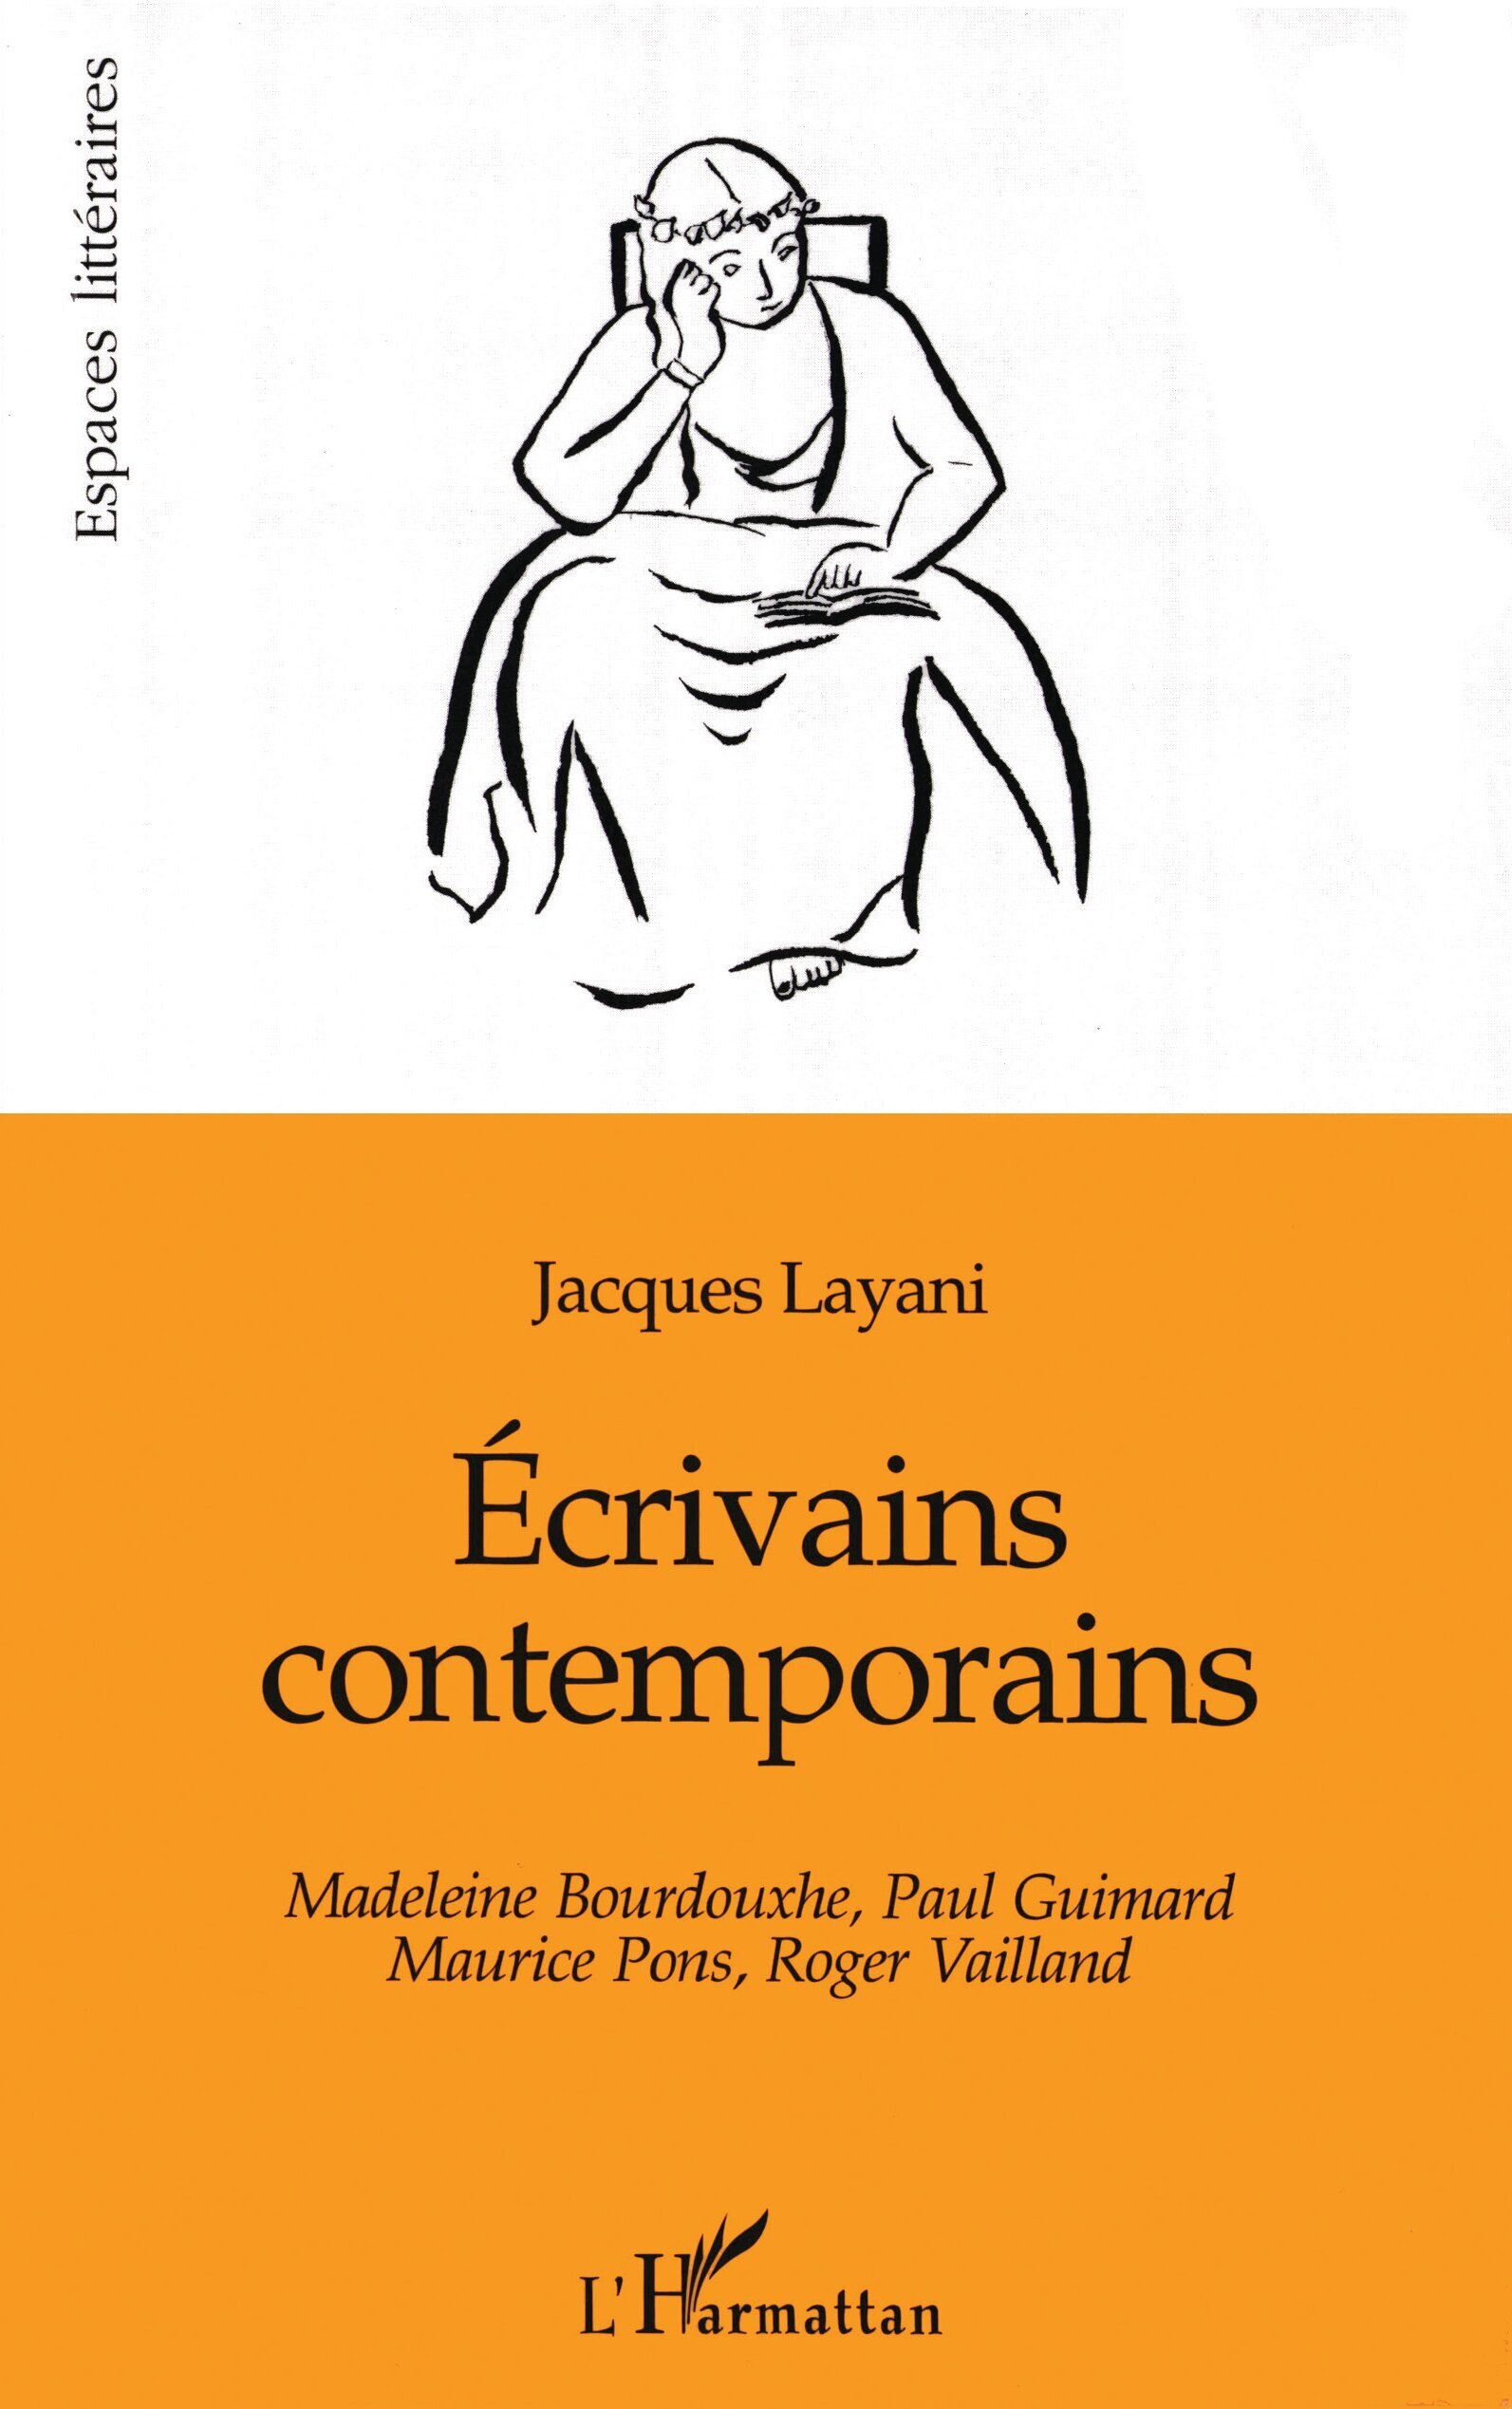 ECRIVAINS CONTEMPORAINS, Madeleine Bourdouxhe, Paul Guimard, Maurice Pons, Roger Vailland (9782738474834-front-cover)